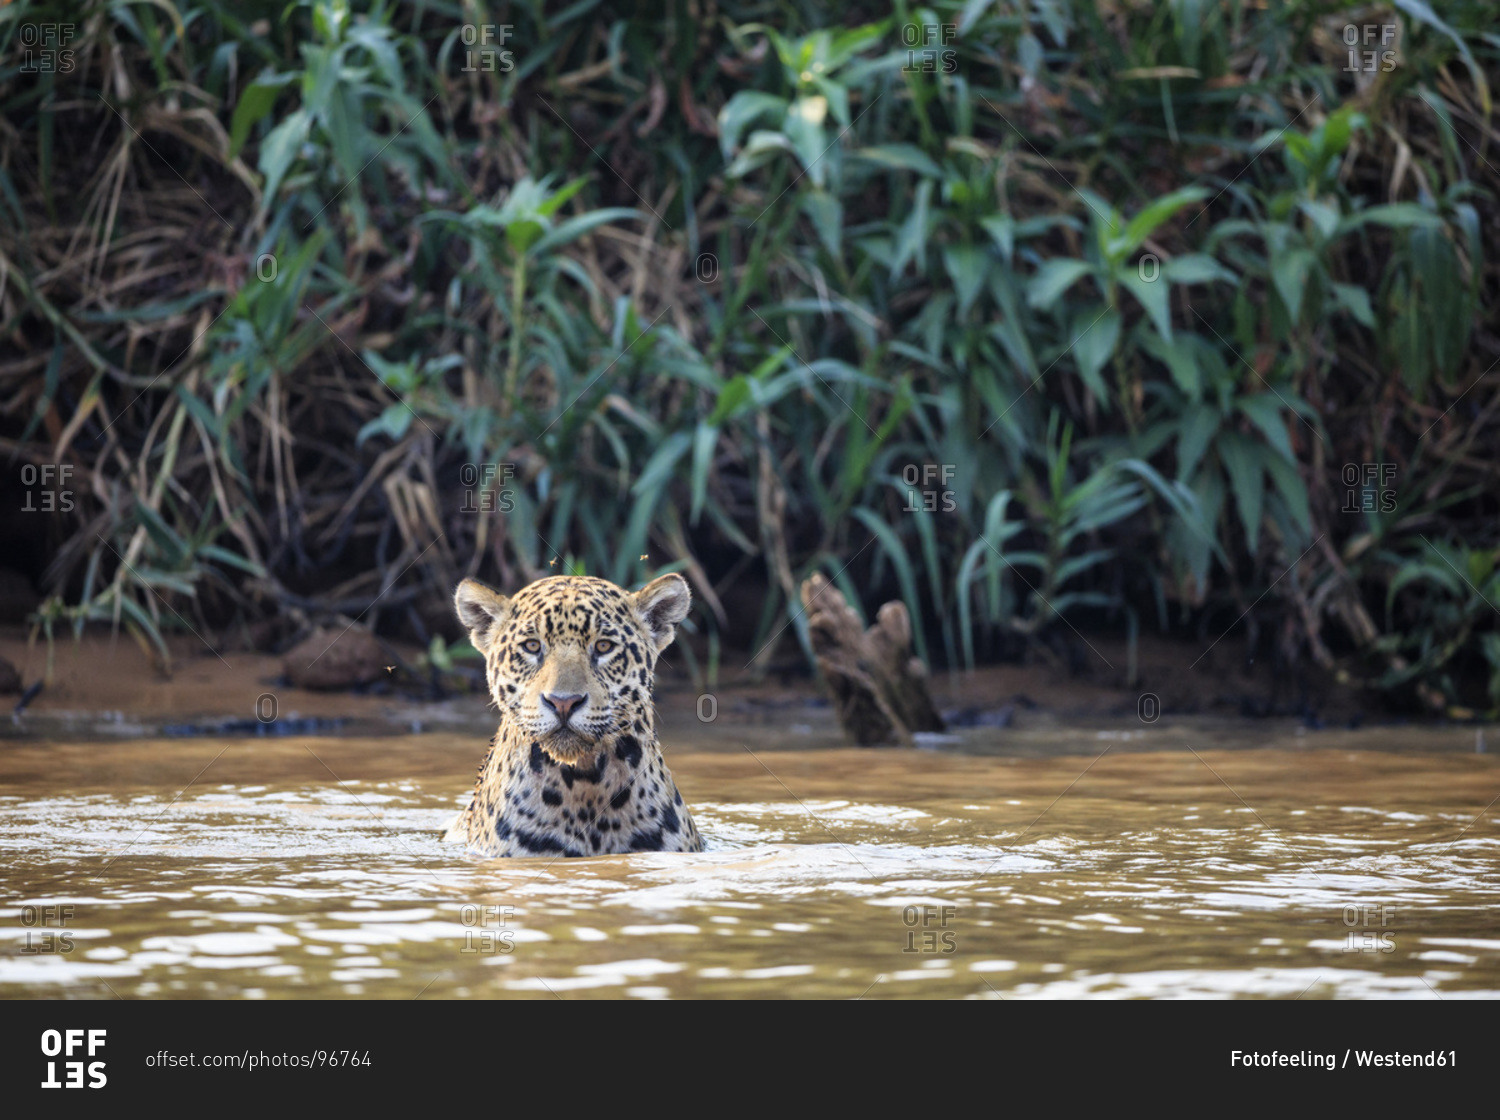 South America, Brasilia, Mato Grosso do Sul, Pantanal, Cuiaba River, Jaguar, Panthera onca, in water